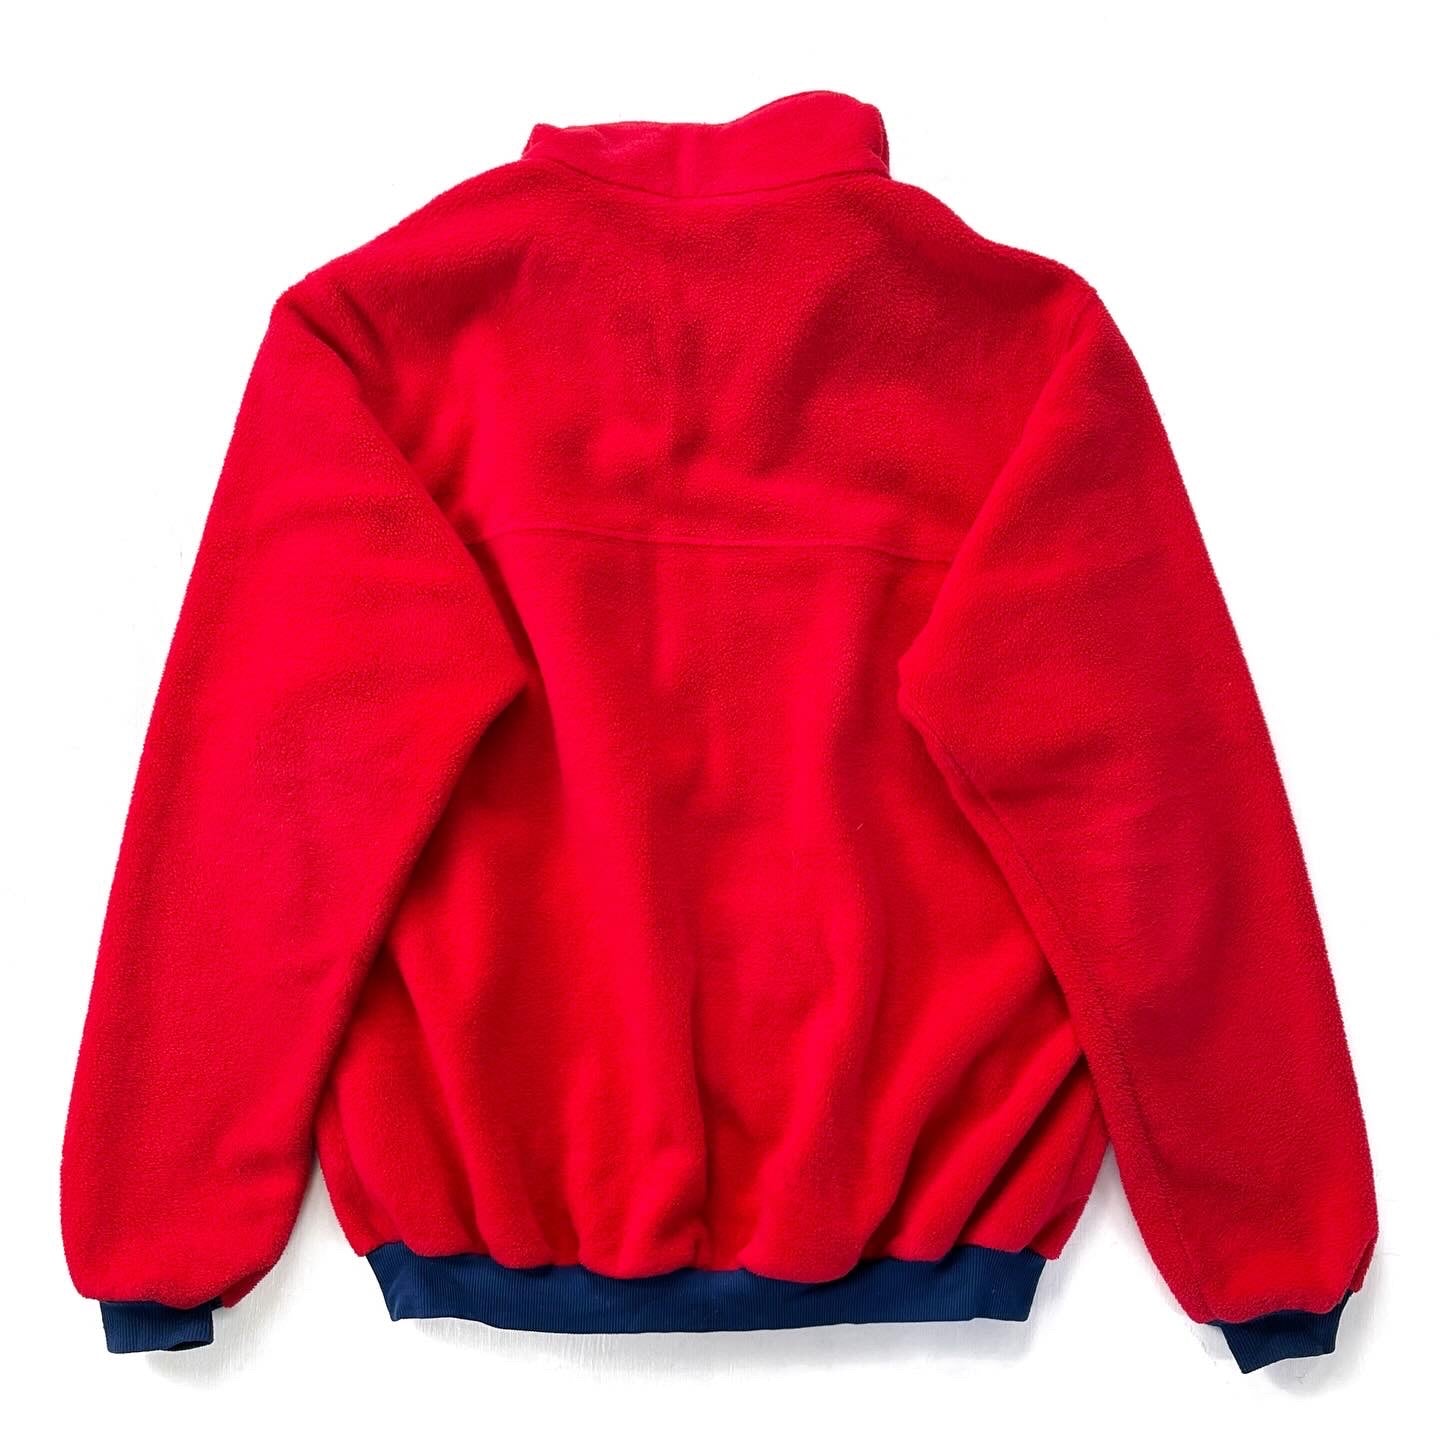 1985 Patagonia Bunting Full-Zip Fleece Jacket, Red & Navy (L)